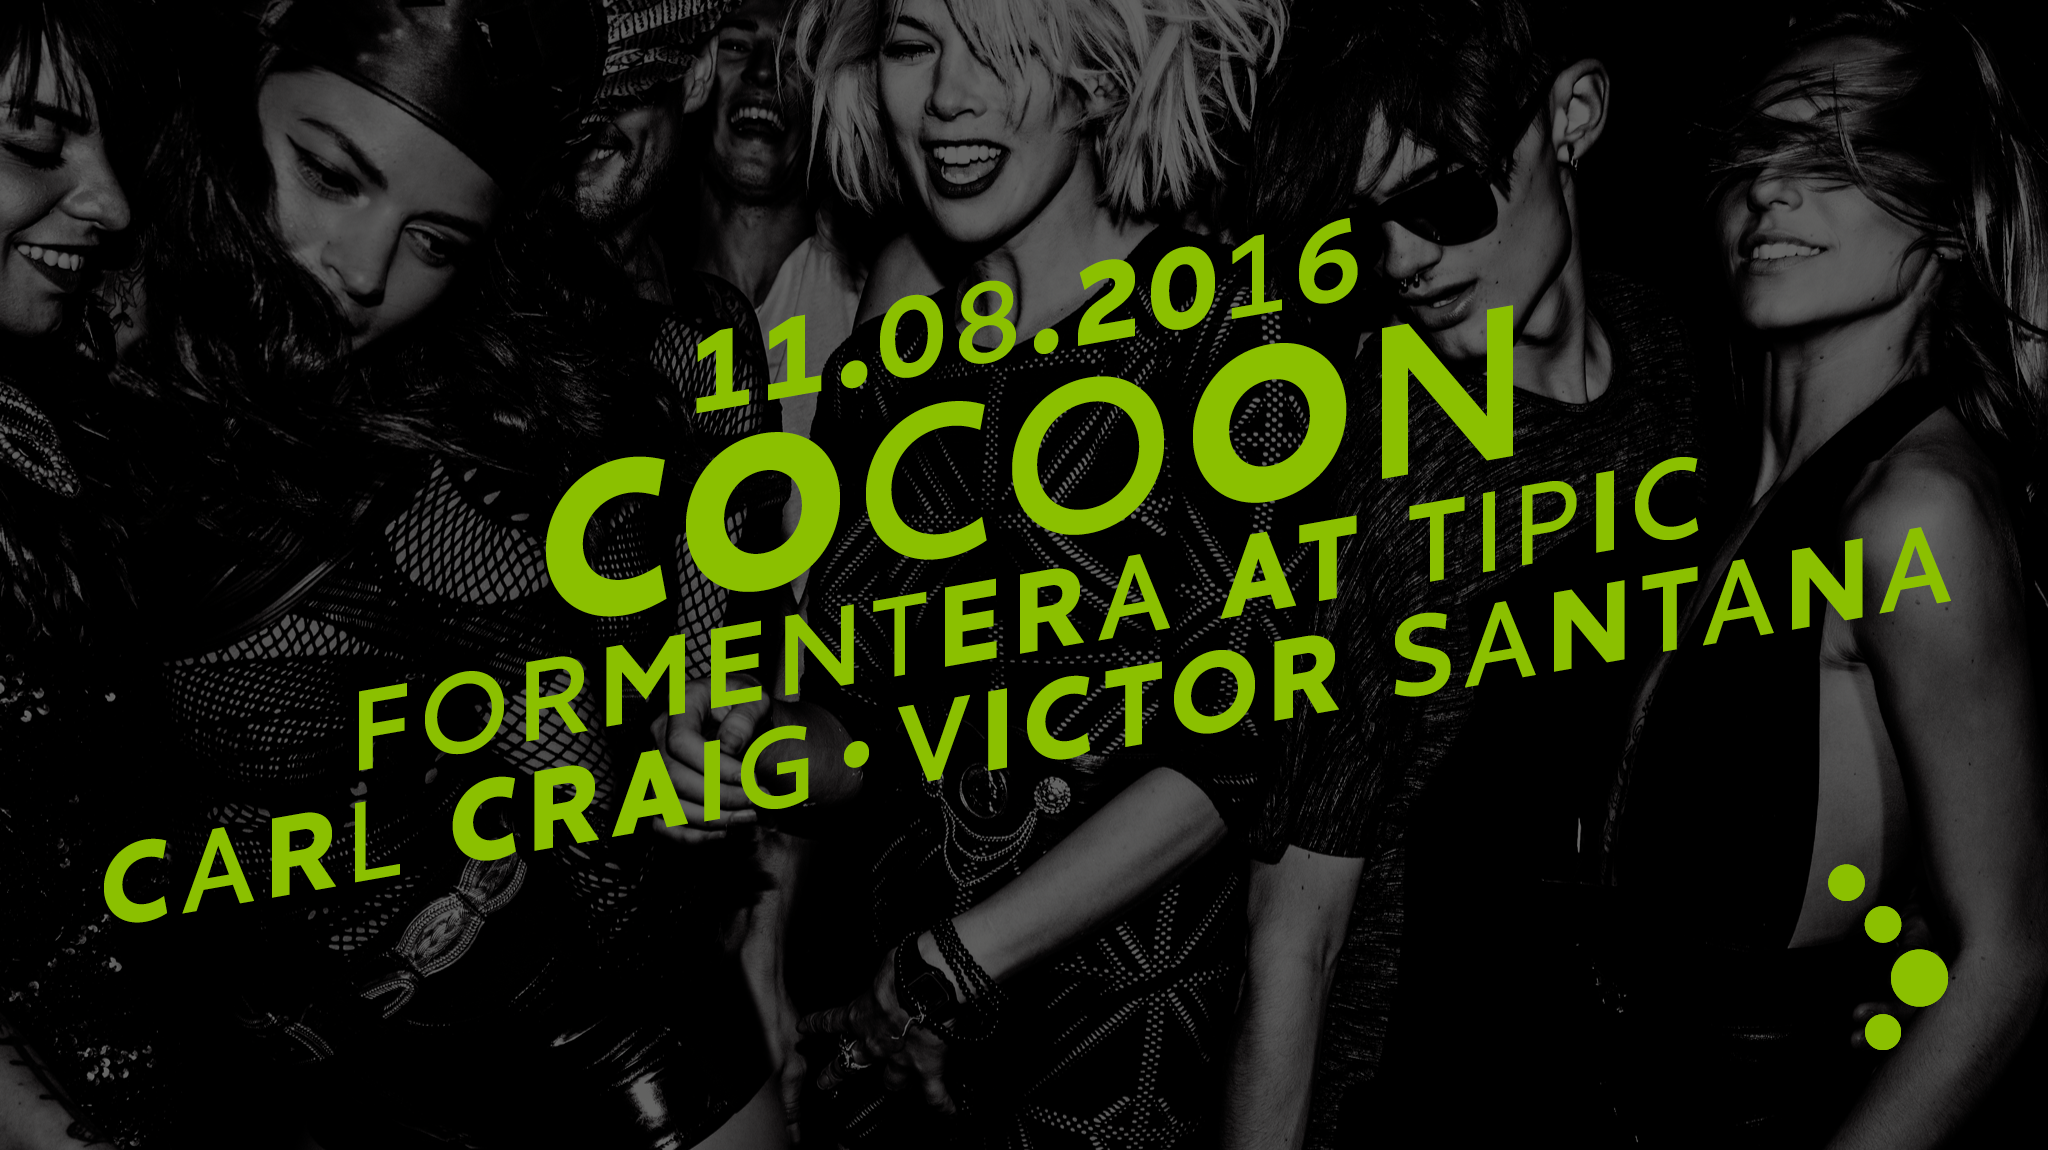 Cocoon_Formentera_2016-Events_FB_EI_2048x1152px_9